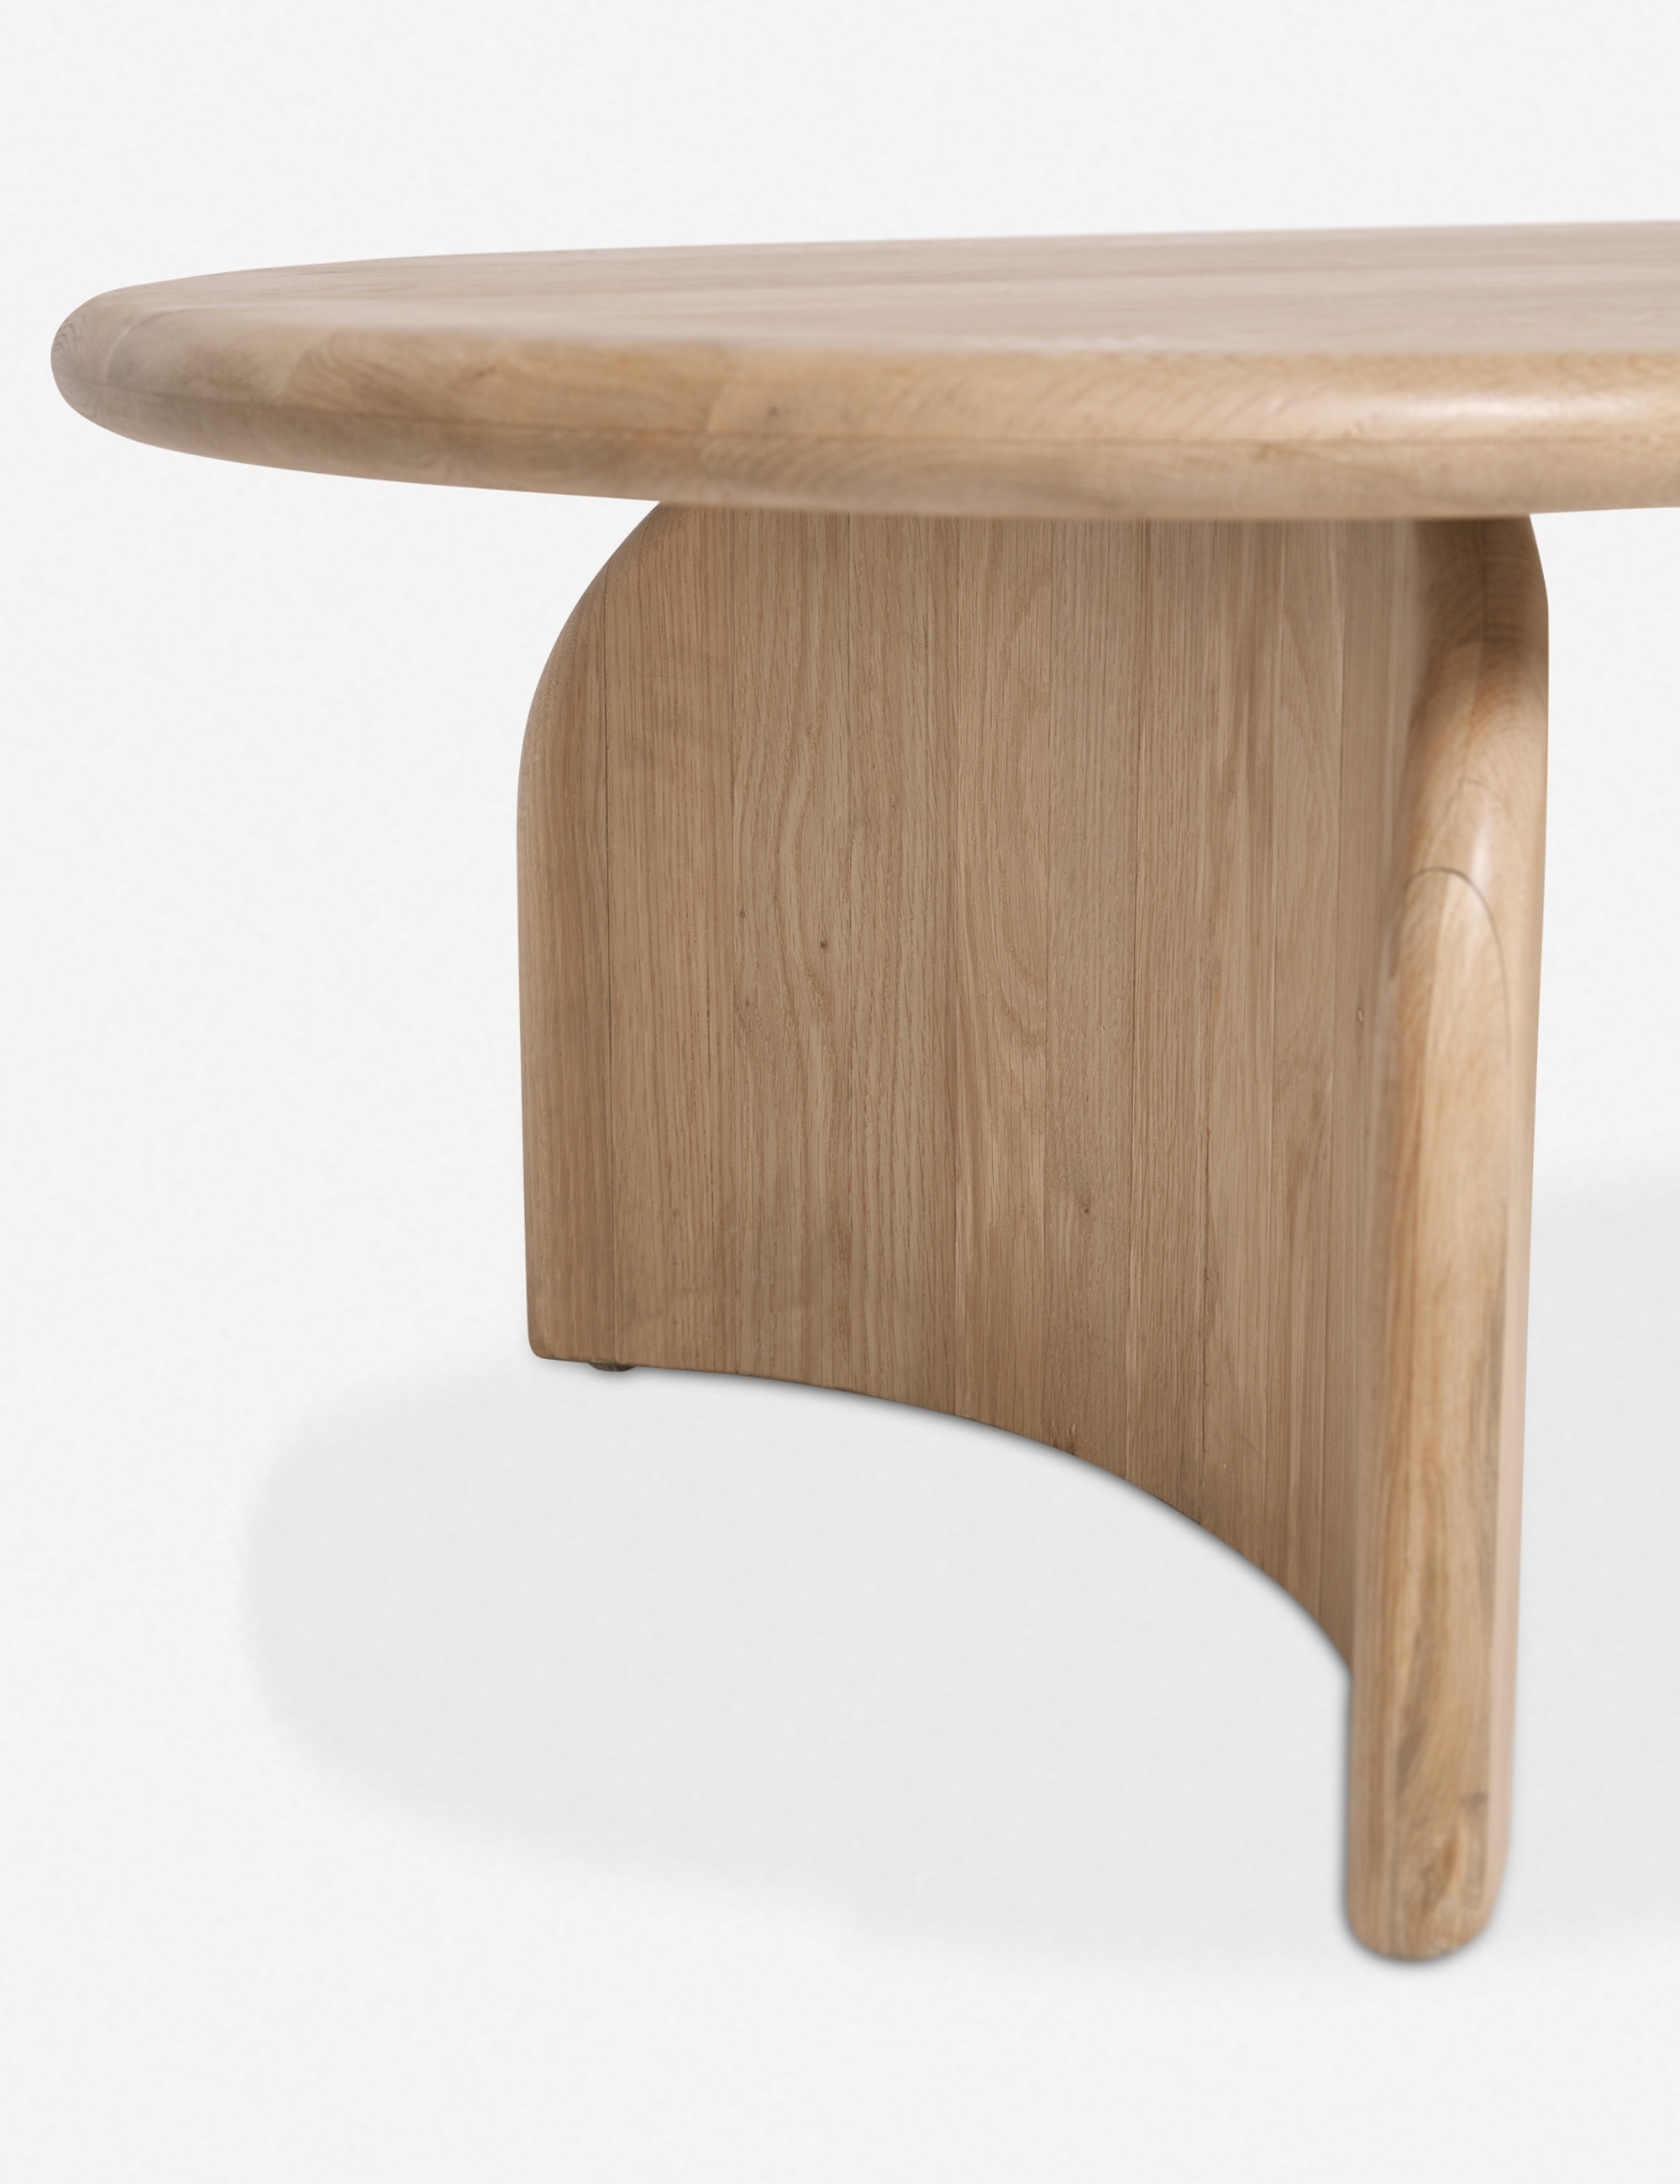 Ada Oval Coffee Table - Image 8